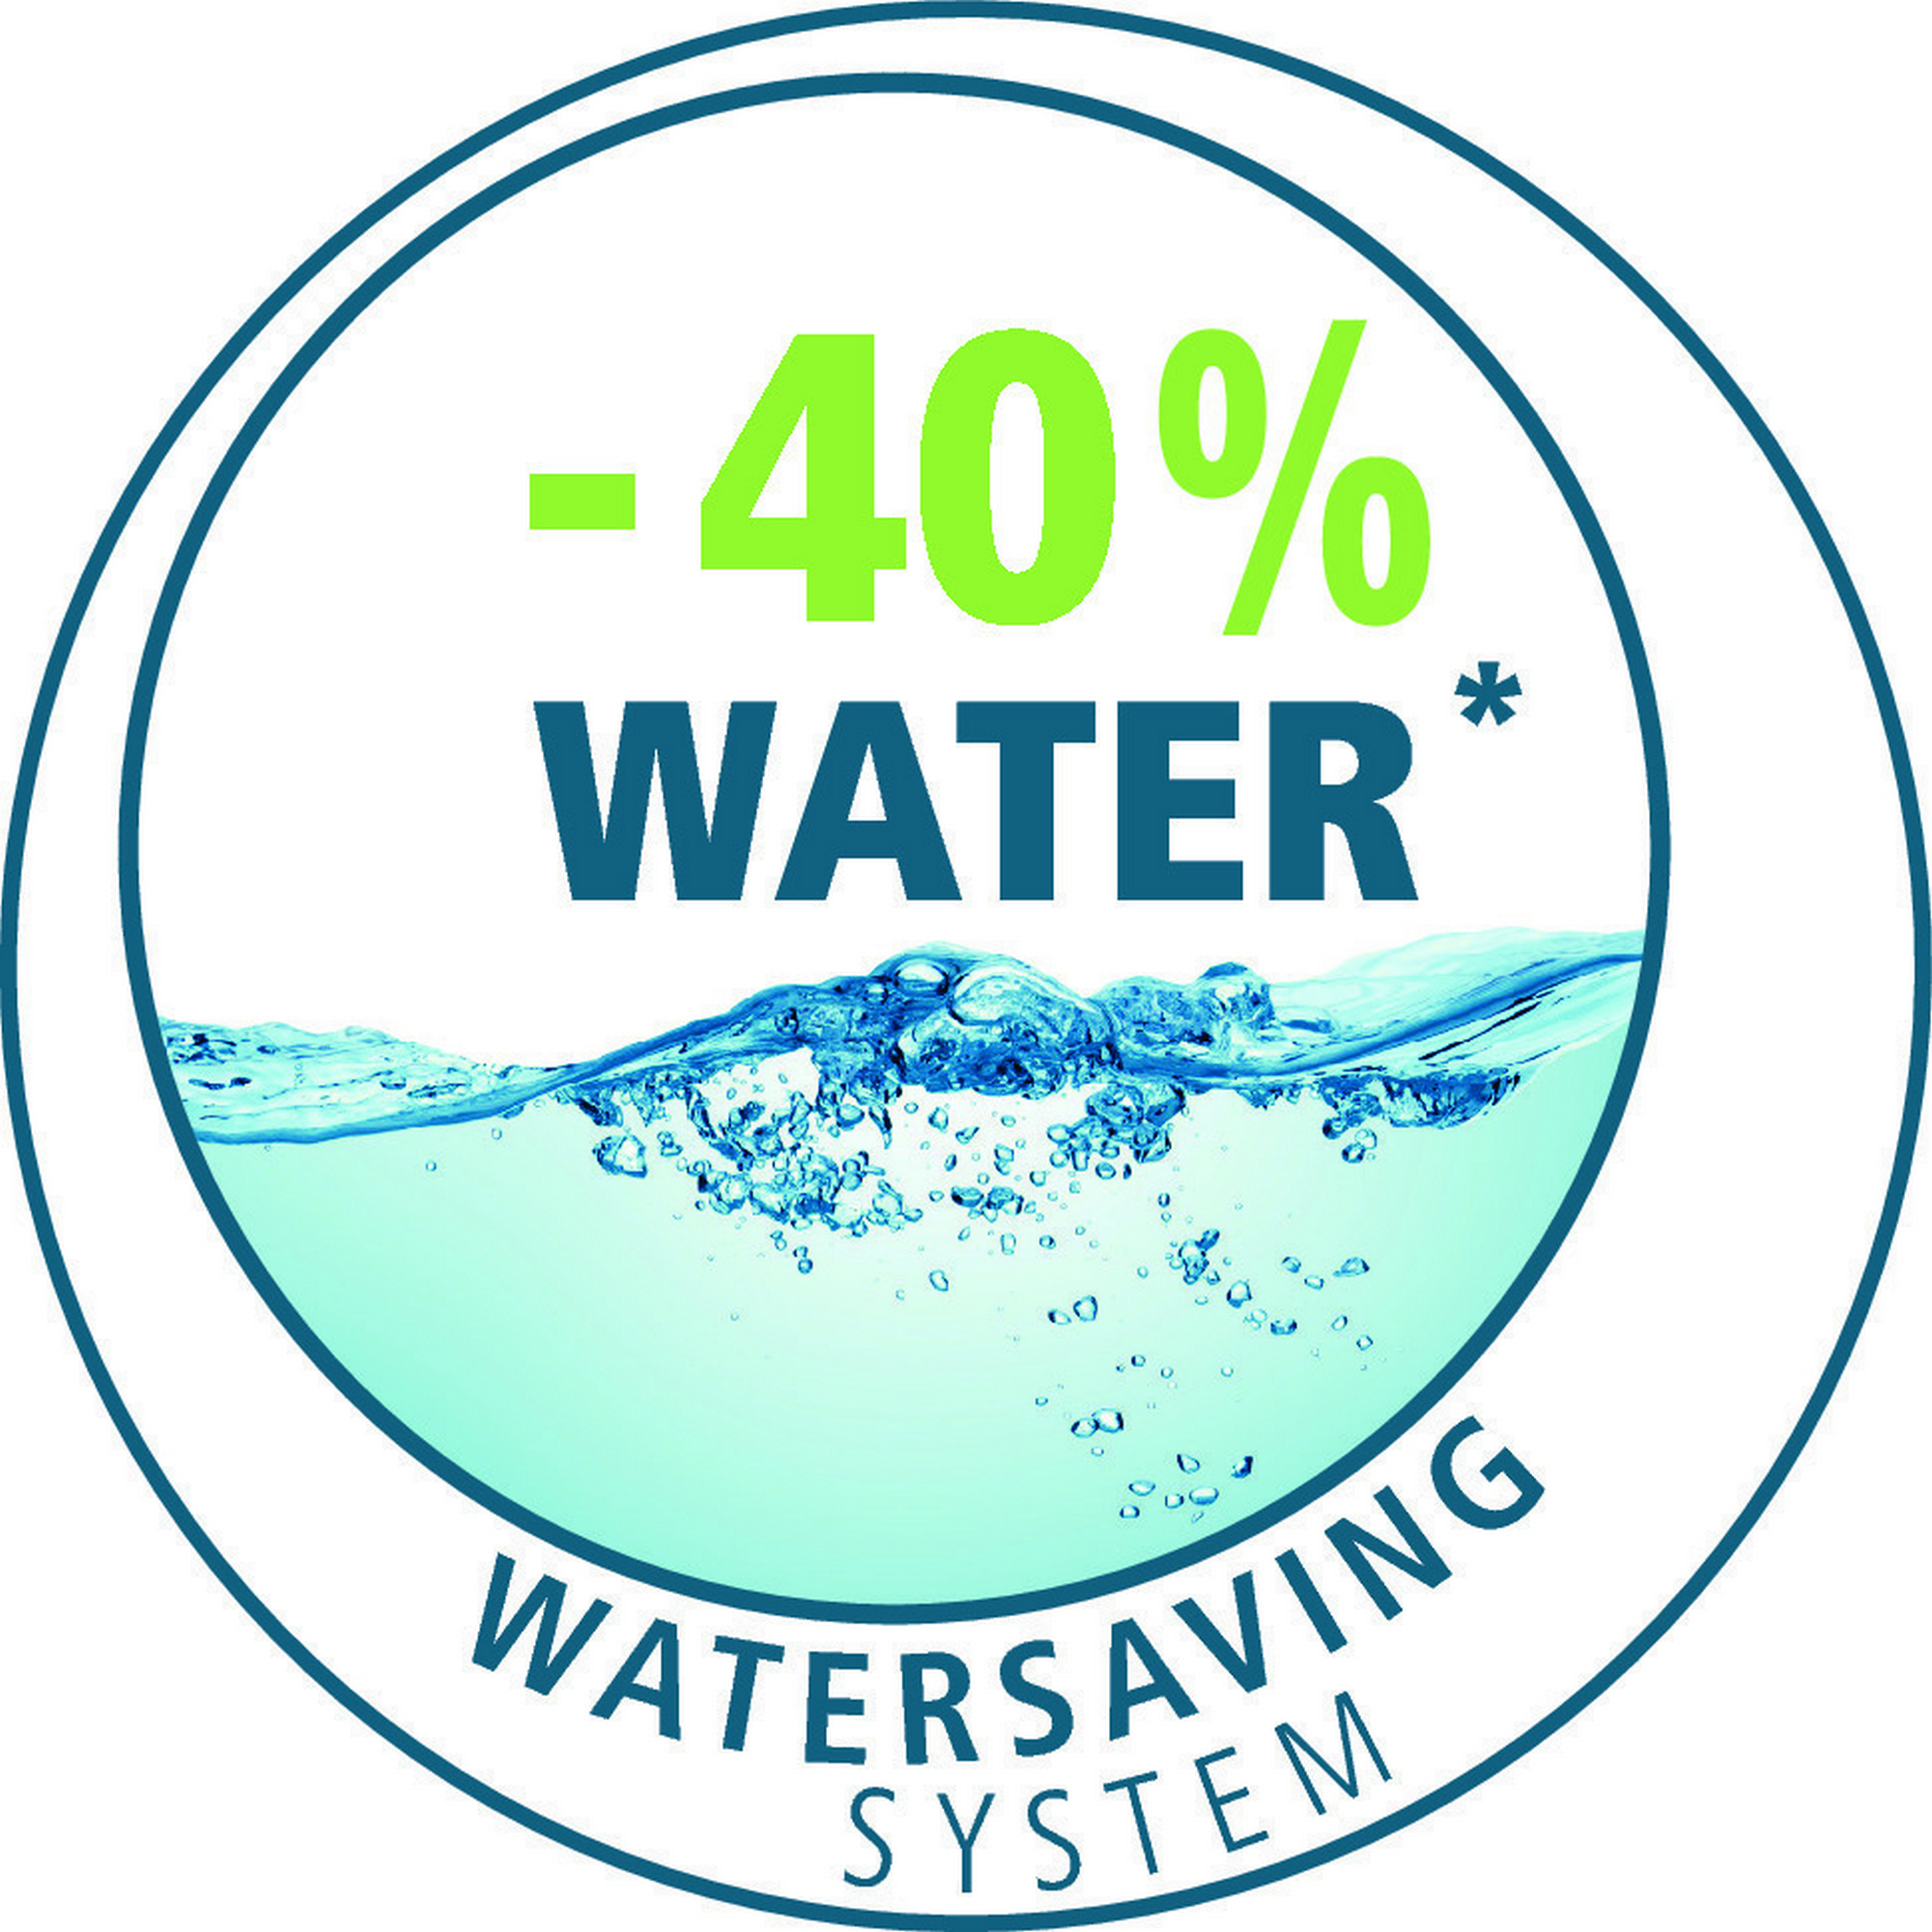 Brauseset 'Water Saving' chromfarben Ø 11 cm, 3 Strahlarten + product picture